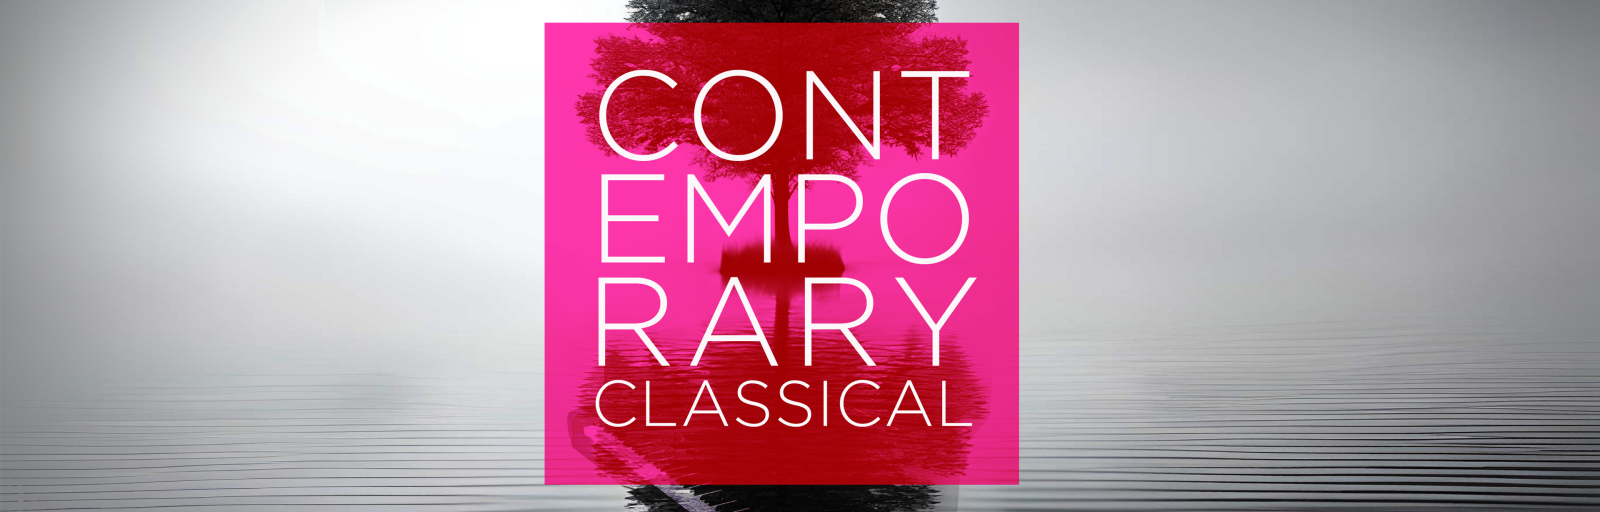 Contemporary Classical Album